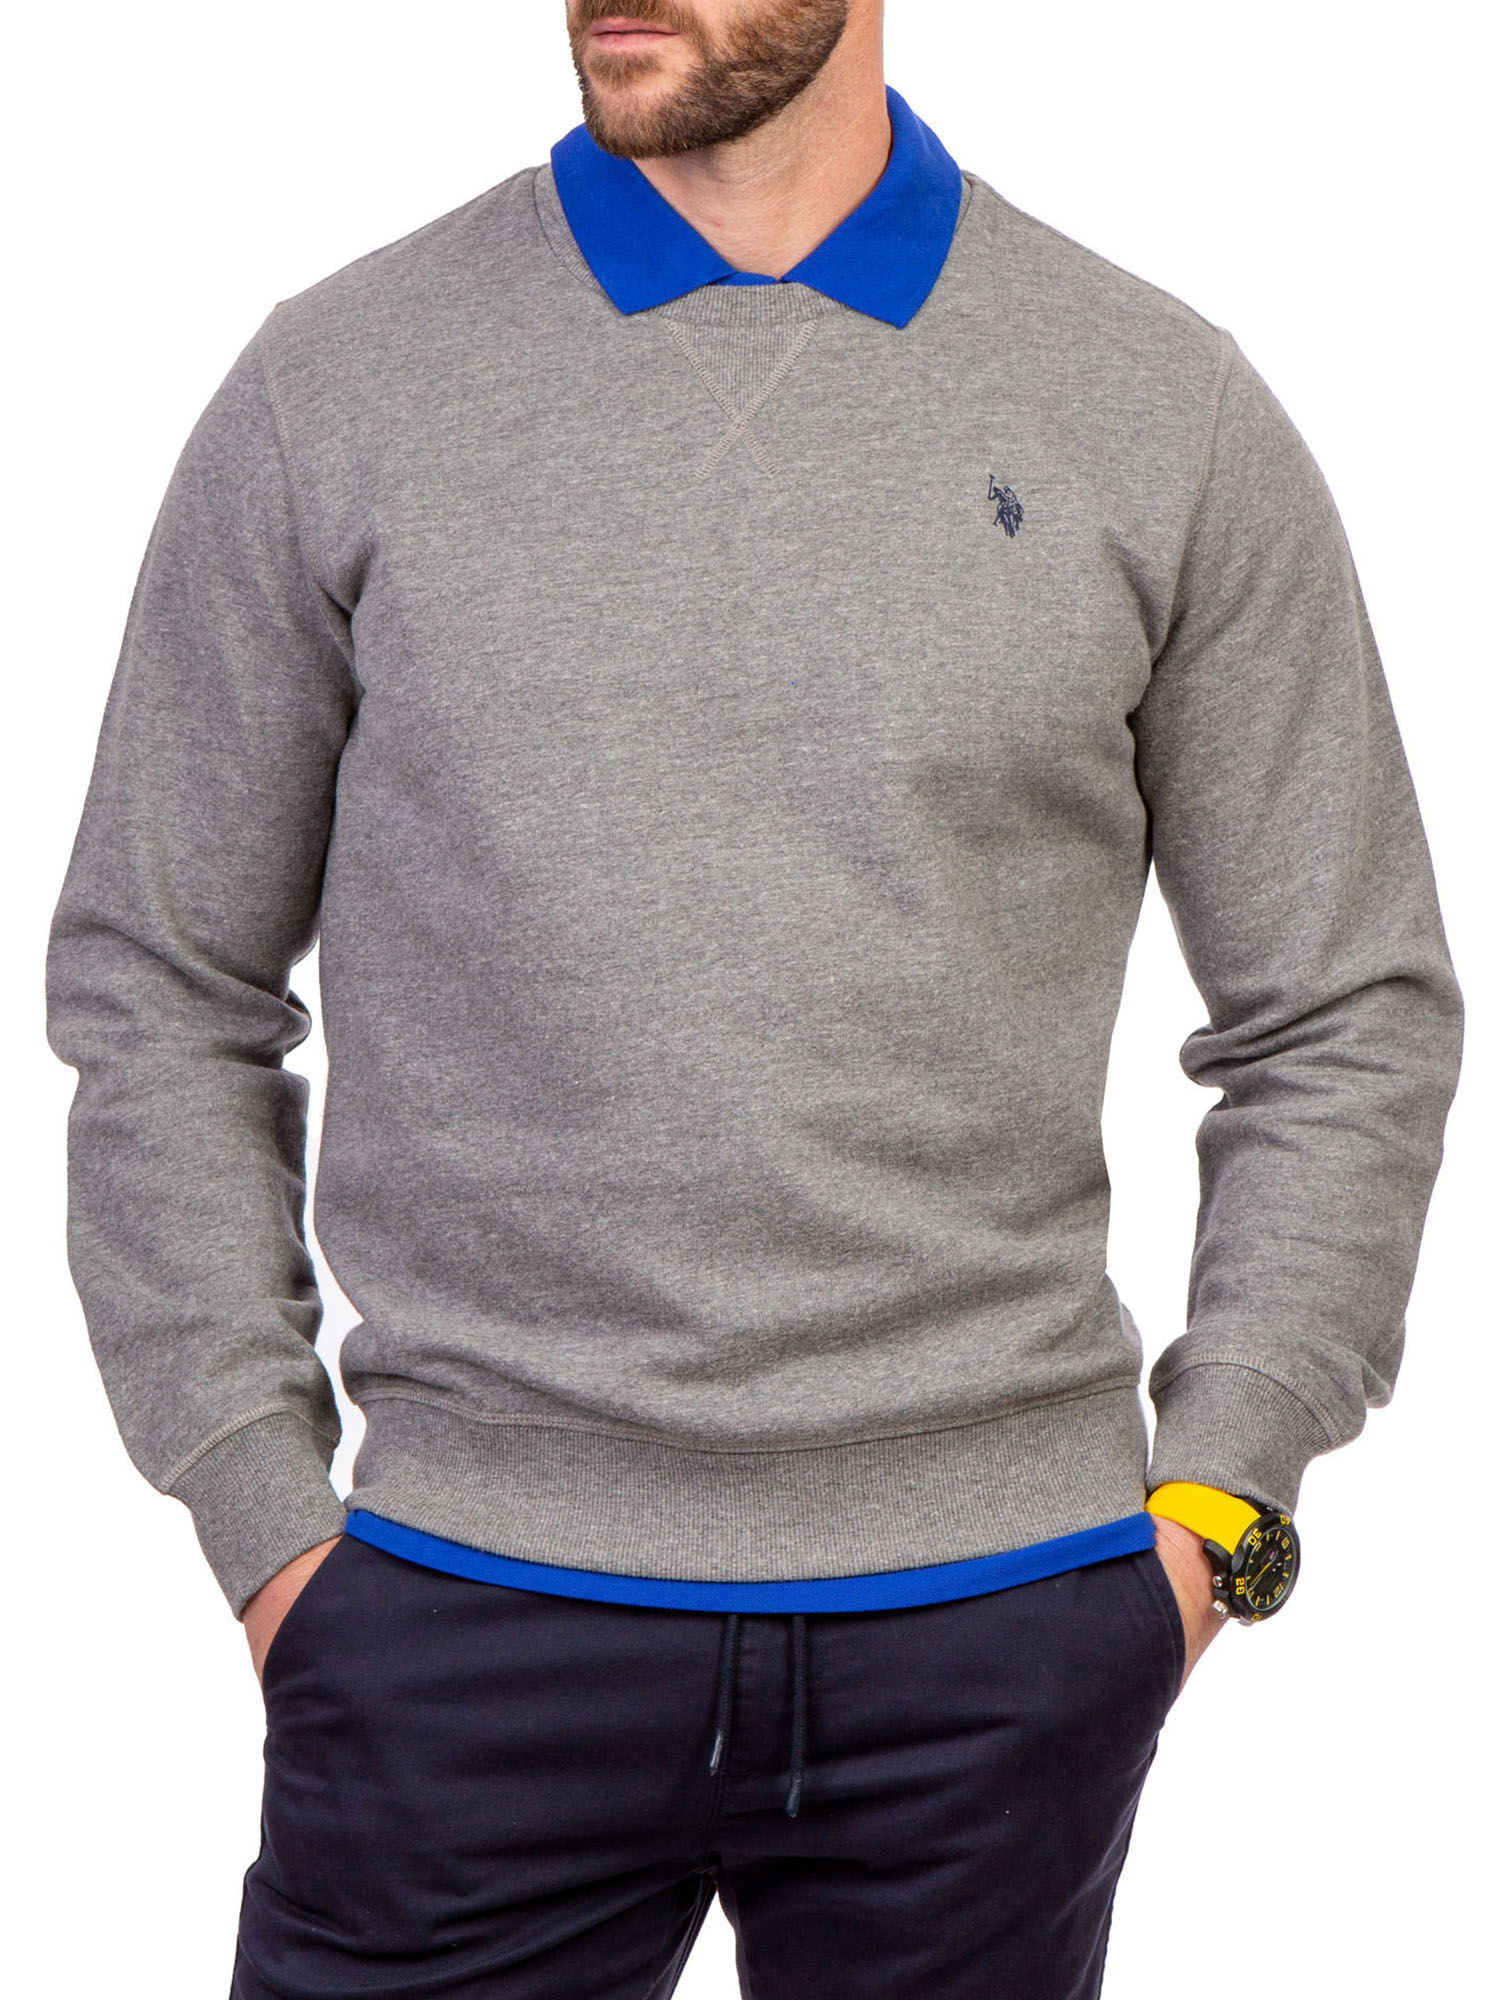 U.S. Polo Assn. Men's Knit Sweater Shirt - image 1 of 4